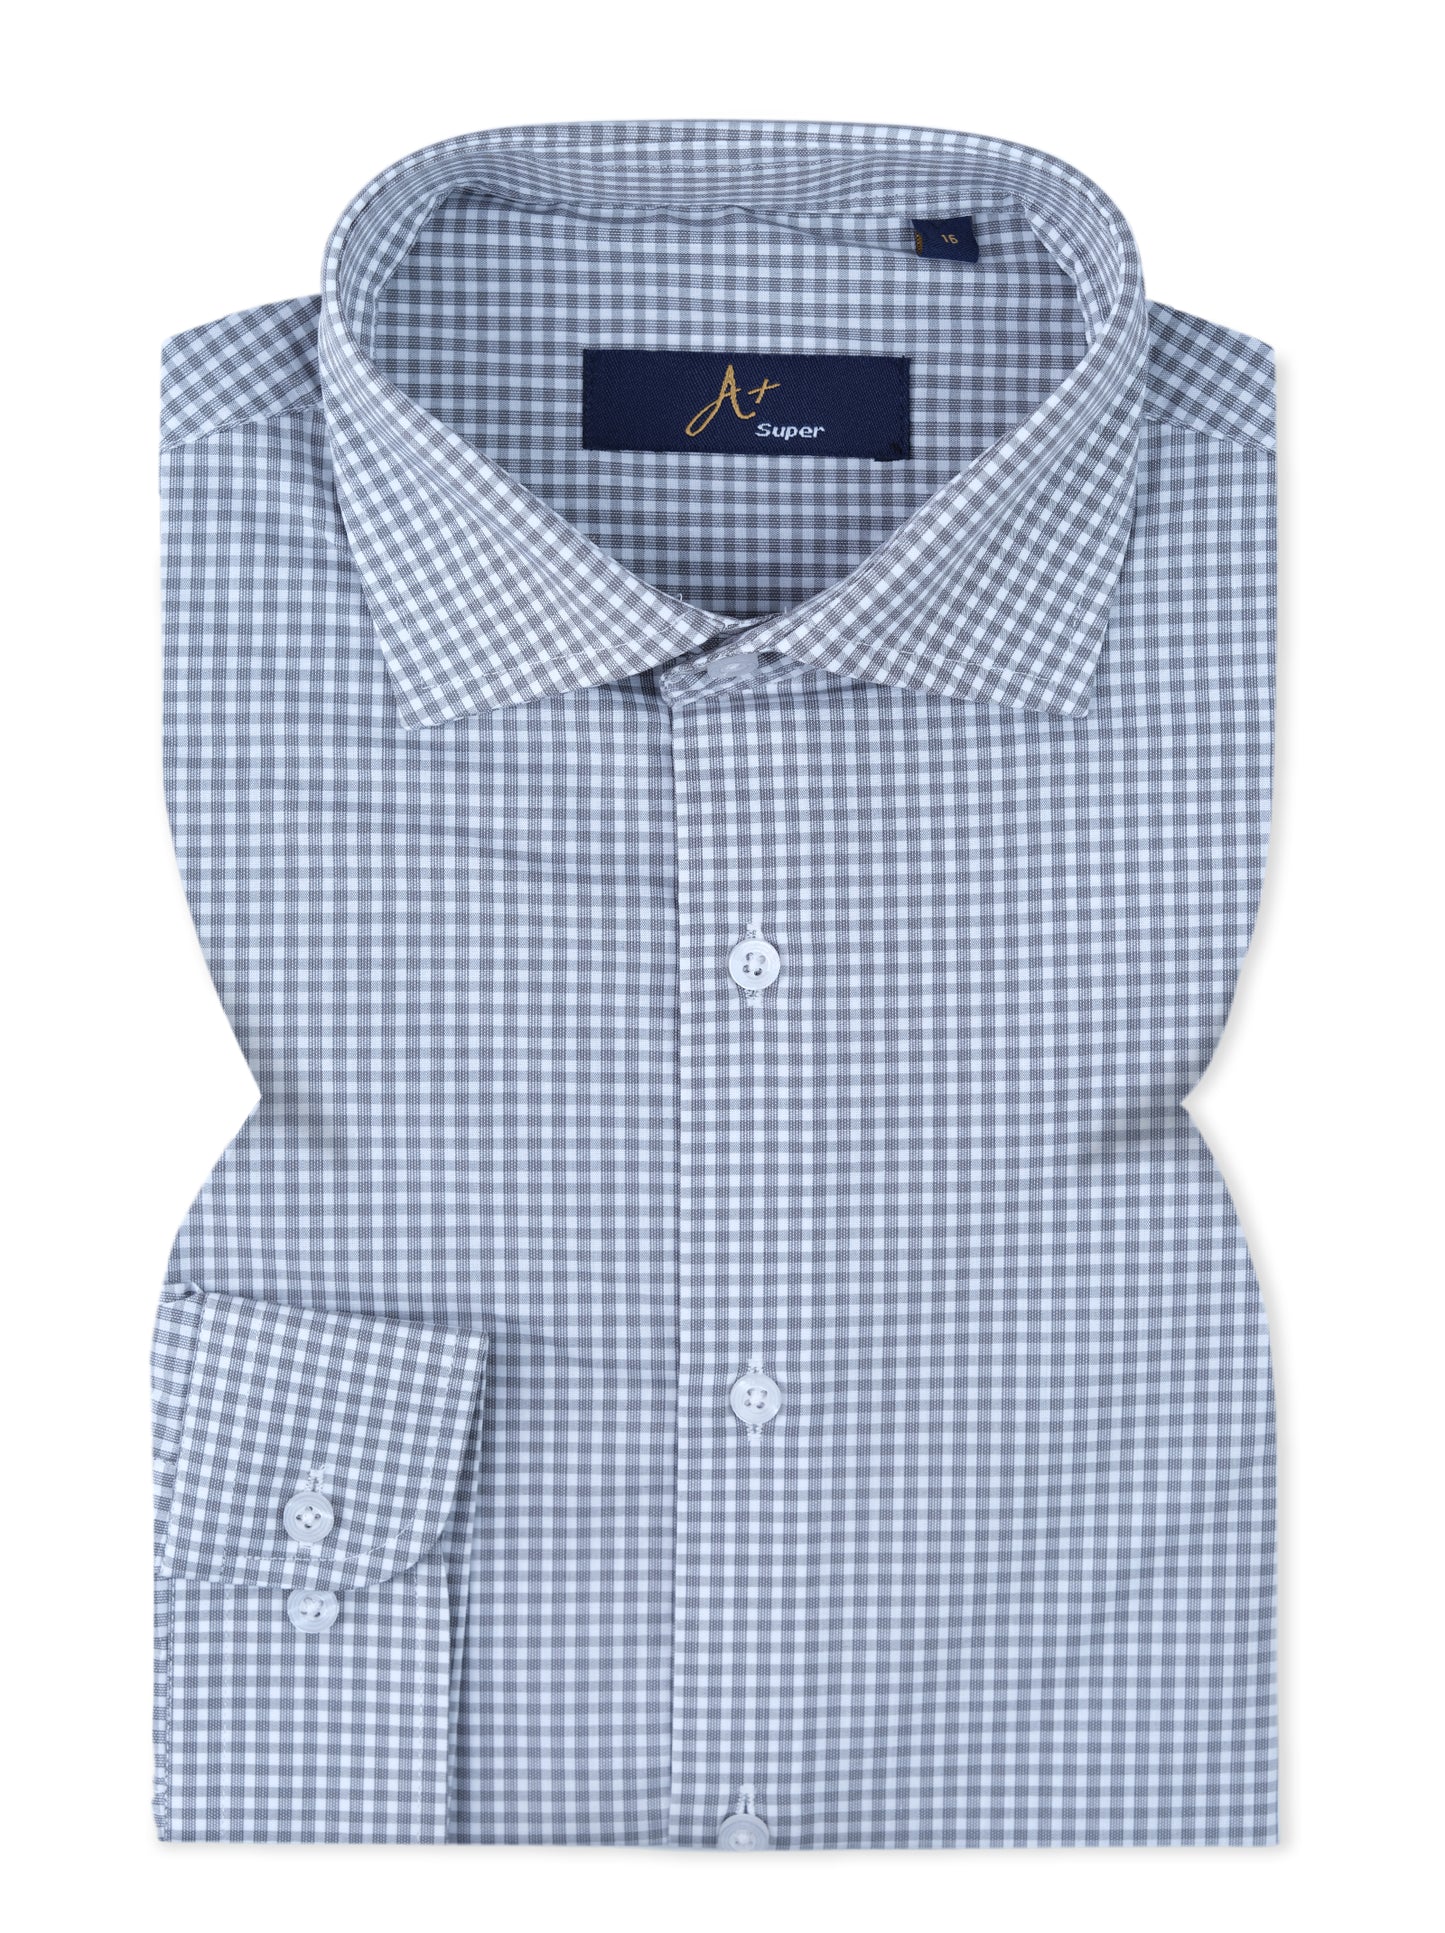 Grey Gingham Check Signature Dress Shirt  Smart Fit